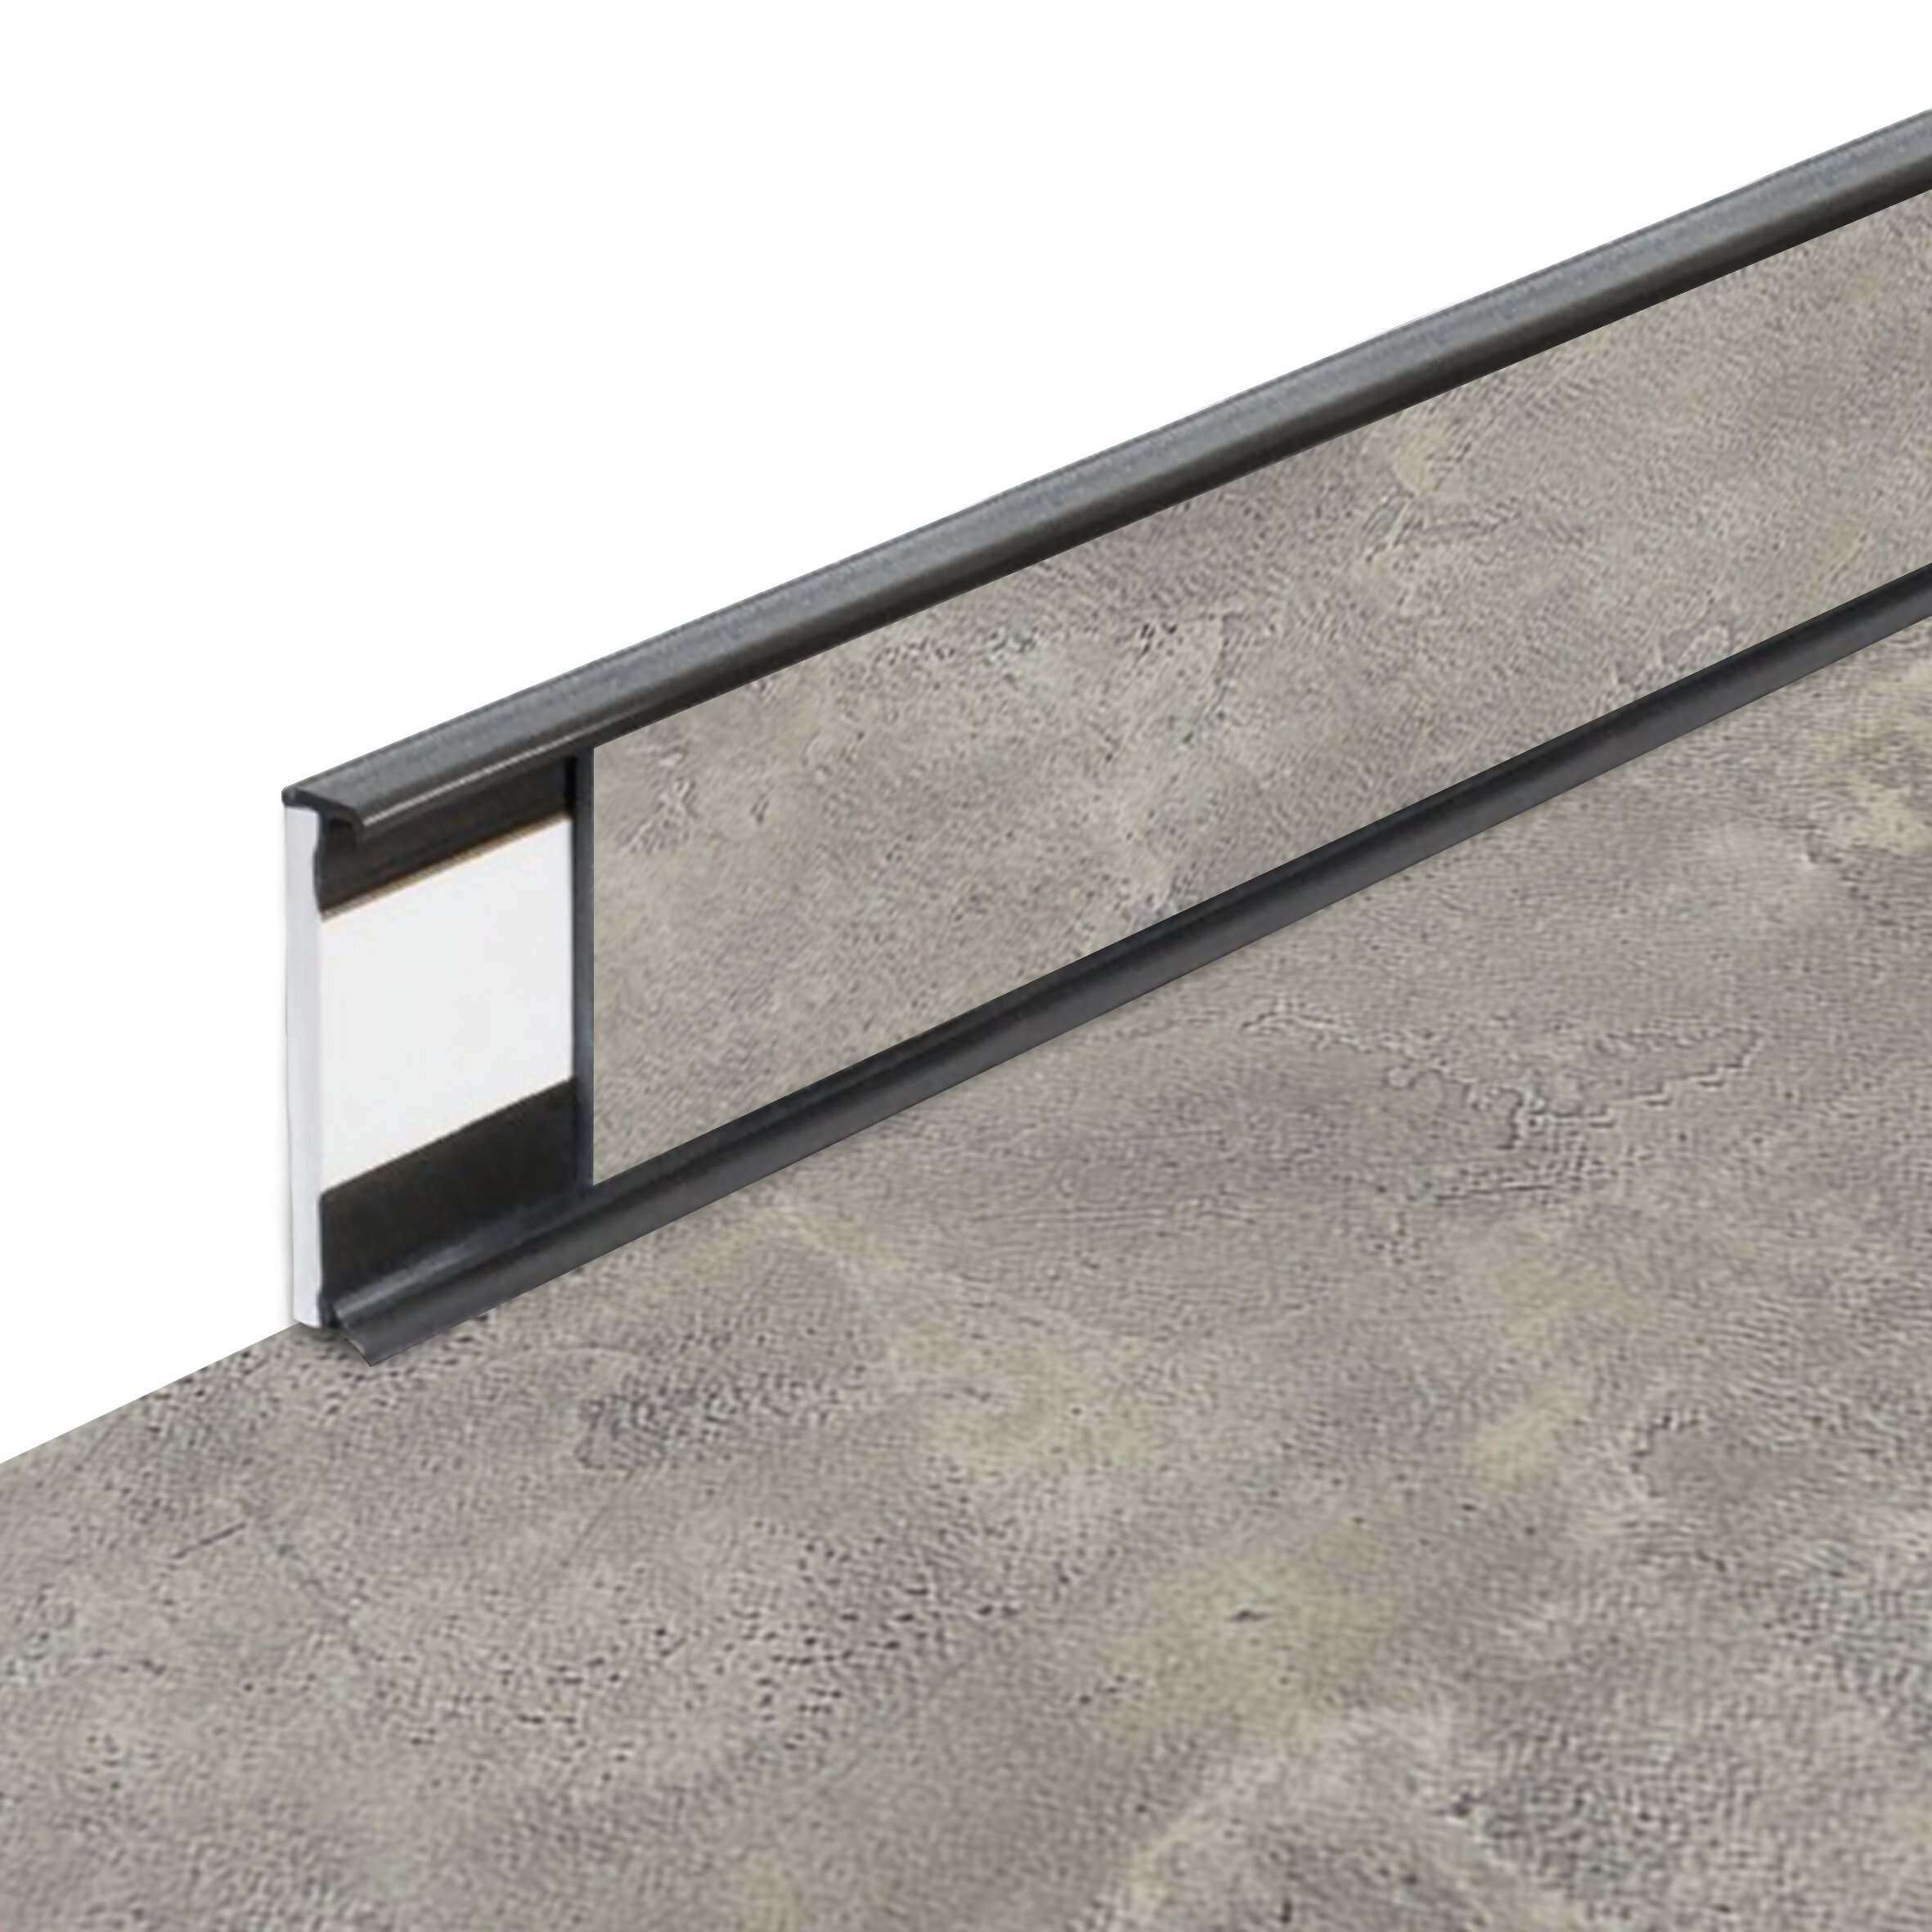 PVC vinylová soklová podlahová lišta Fortelock Business Forsen grey clay C022 graphite - délka 200 cm, výška 5,8 cm, tloušťka 1,2 cm